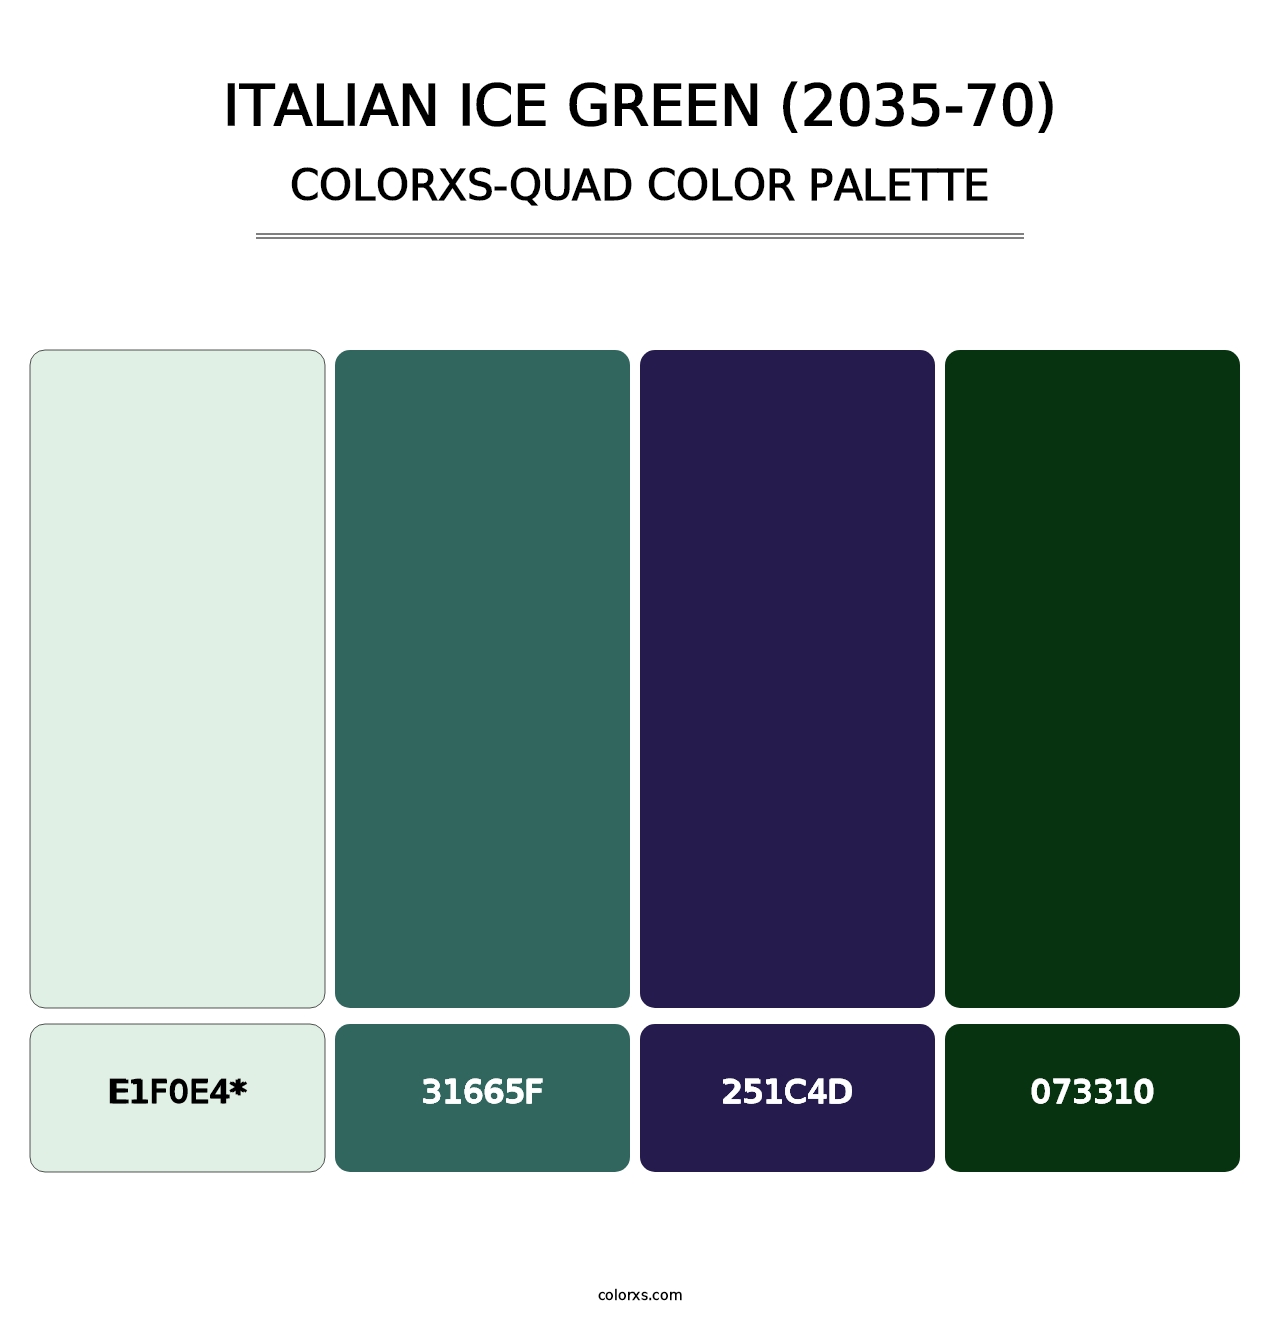 Italian Ice Green (2035-70) - Colorxs Quad Palette